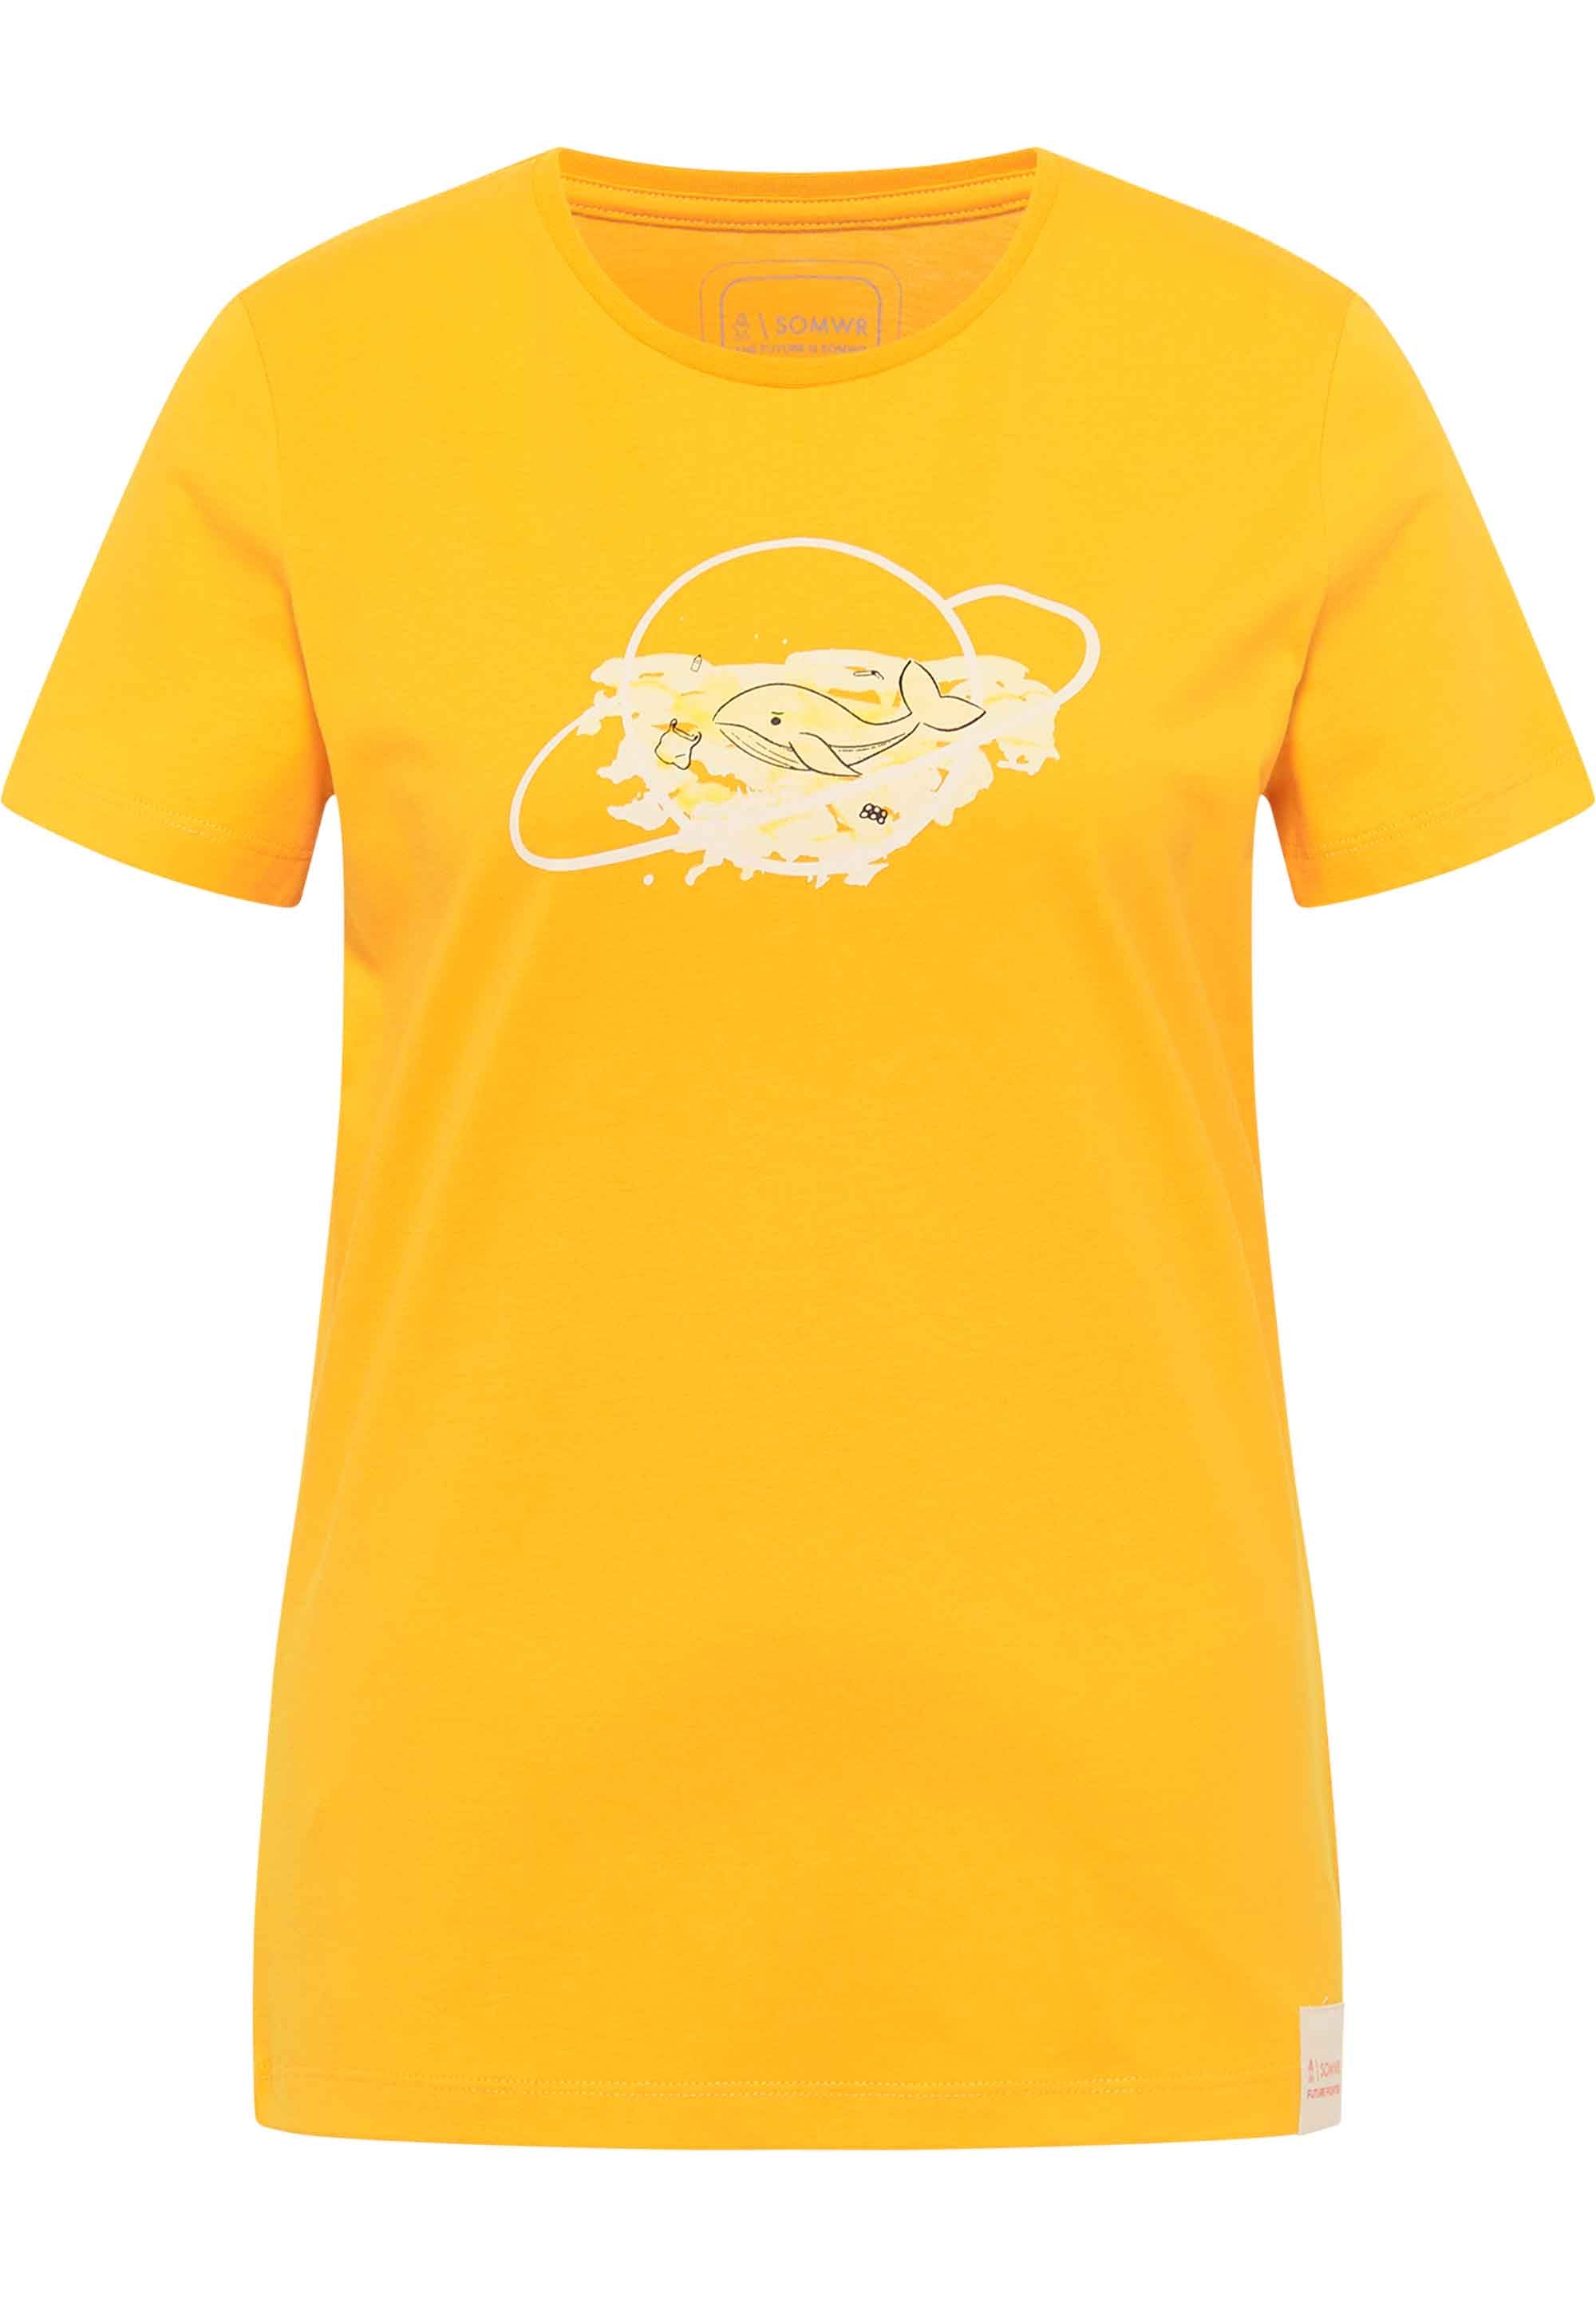 SOMWR TRASHED T-Shirt YEL008